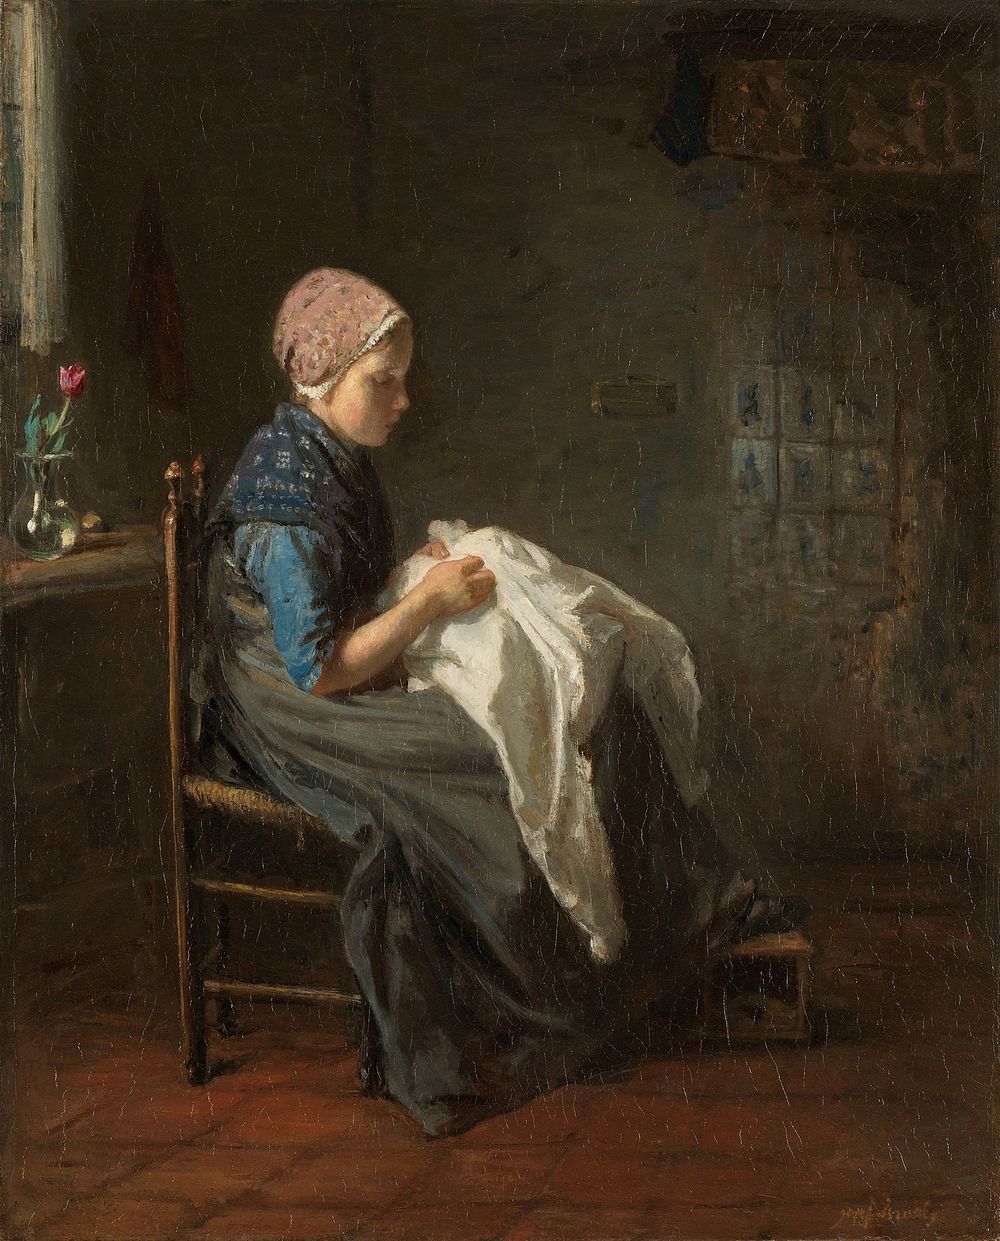 'The Little Seamstress' (1850 - 1888) by Jozef Israëls